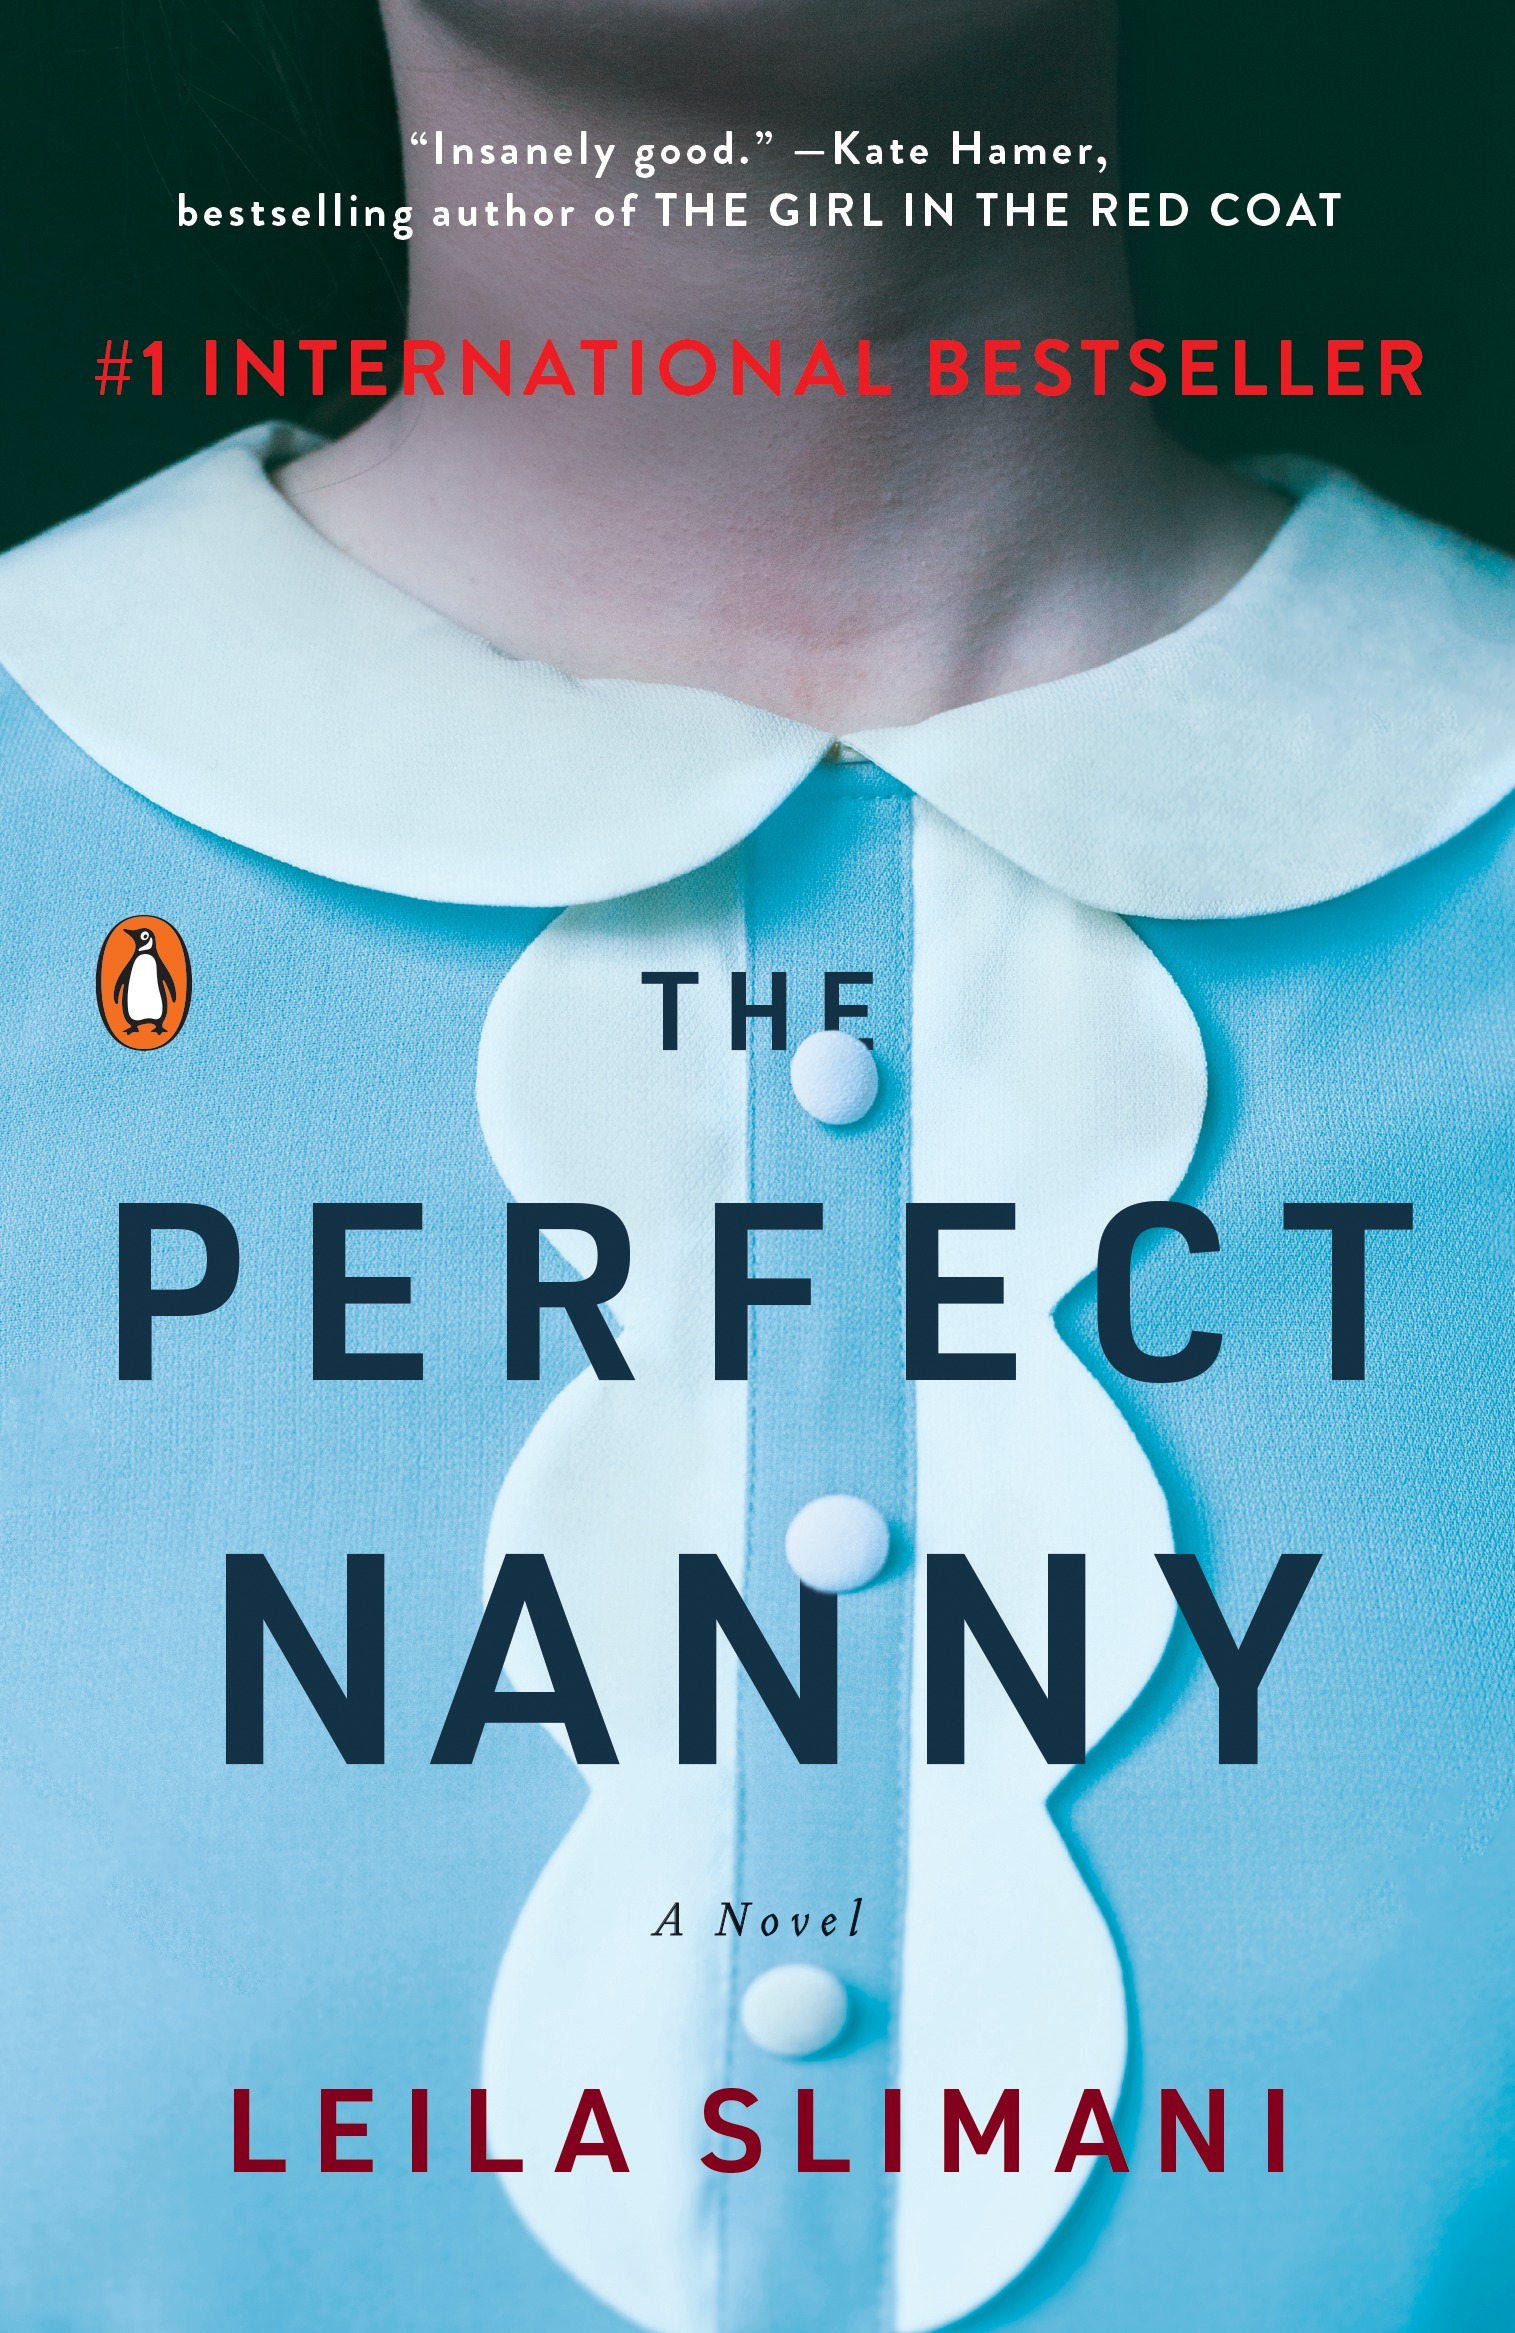 Leïla Slimani, Leïla Slimani: The Perfect Nanny: A Novel (AudiobookFormat, 2018, Penguin Books)